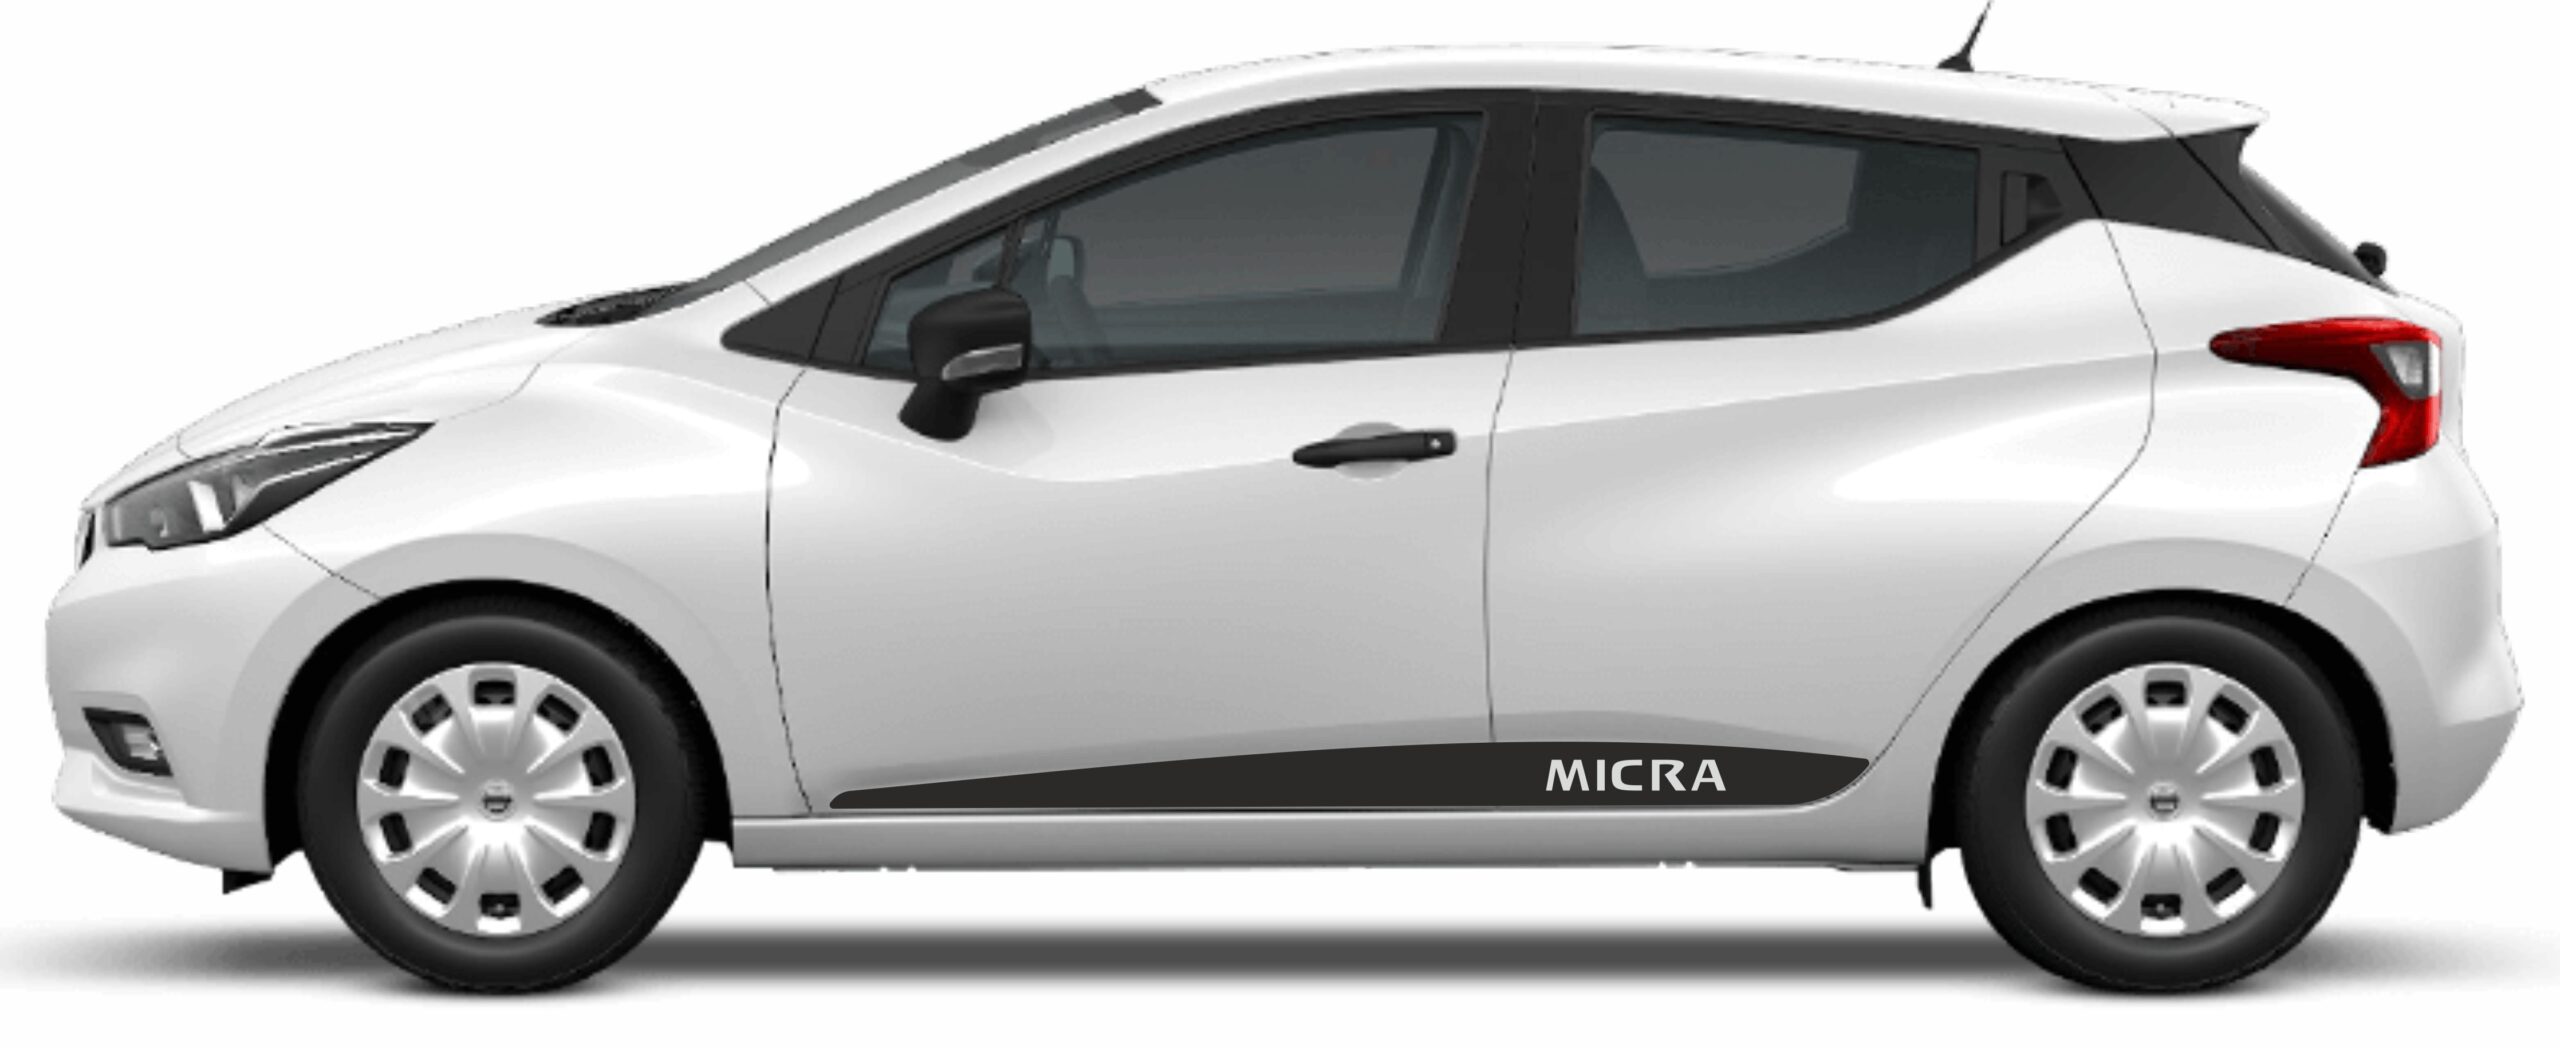 Nissan MICRA naklejki decals stripes sticker aufkleber nalepky samolepky tuning